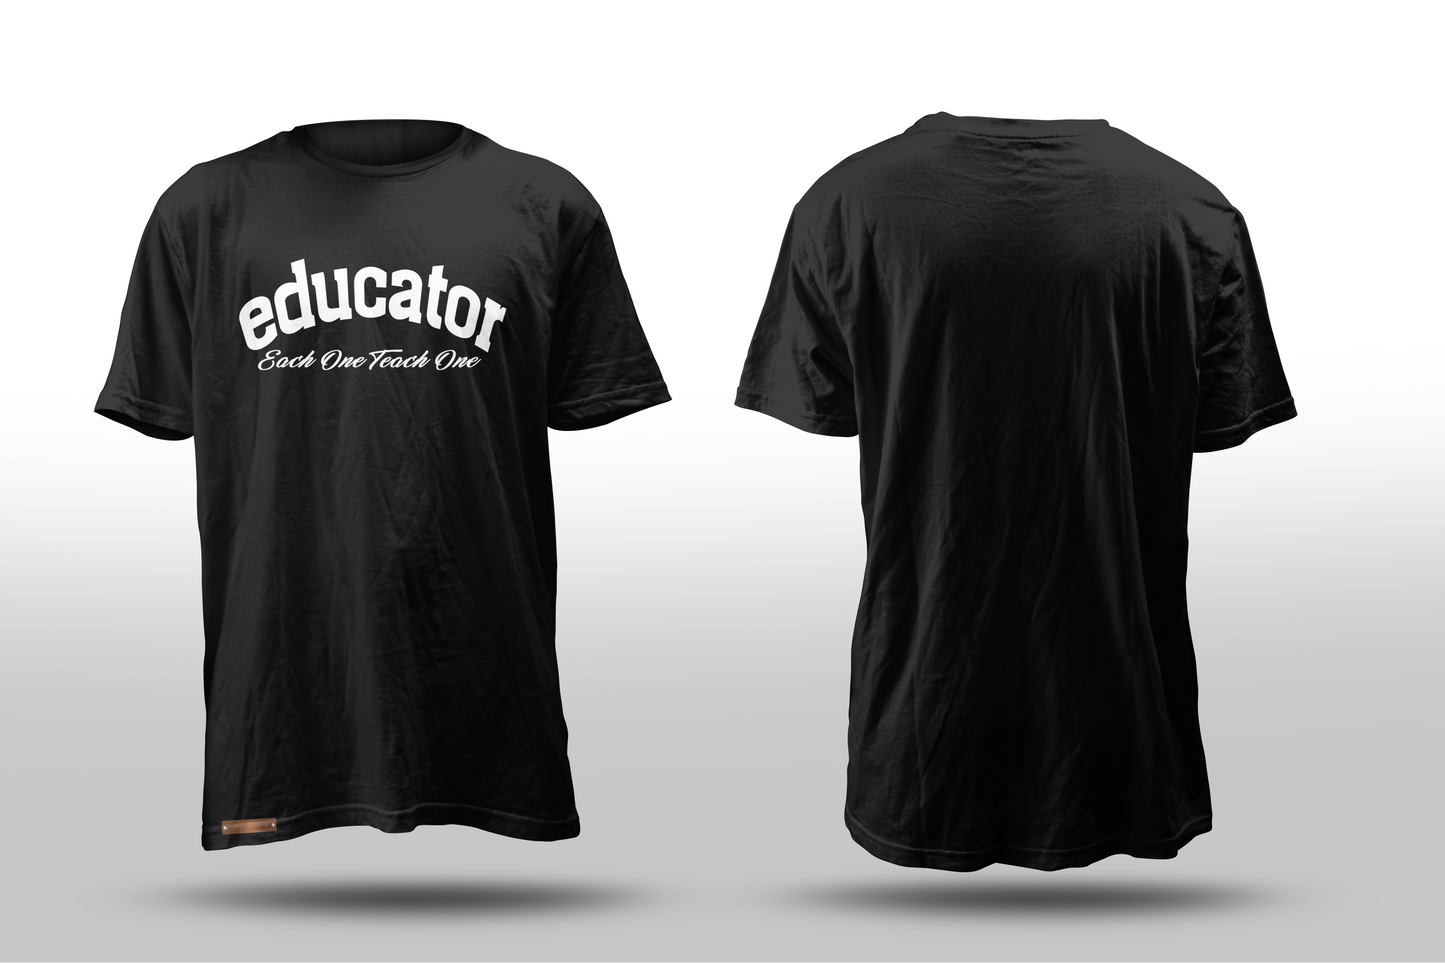 Educator Black Short Sleeve T-Shirt "Each One Teach One"